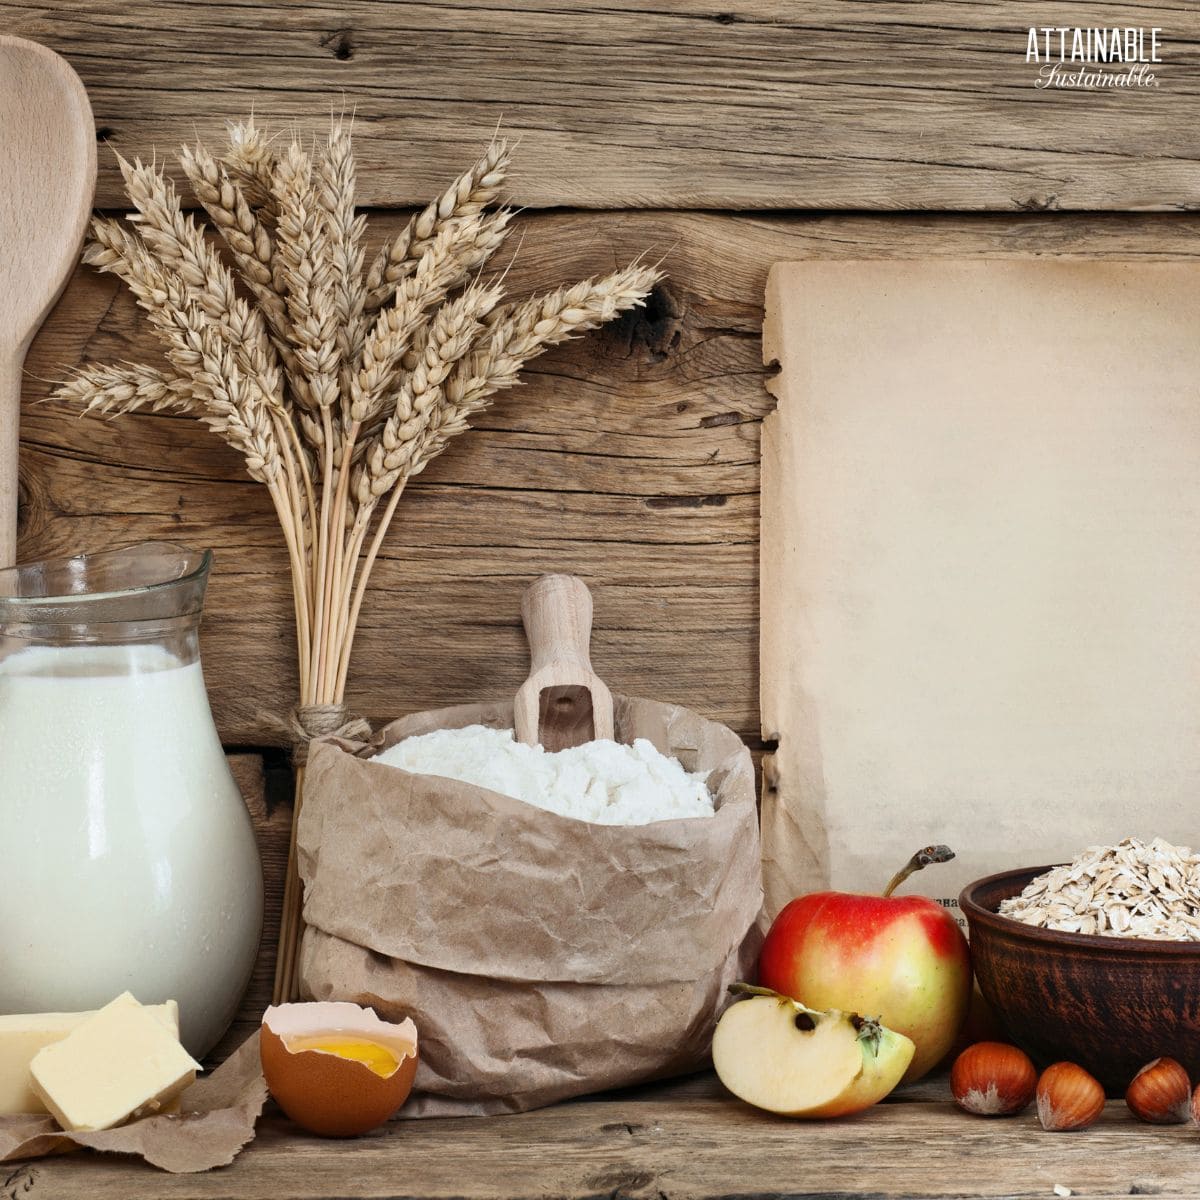 ingredients against a wooden backdrop: flour, egg, butter, milk, apples.